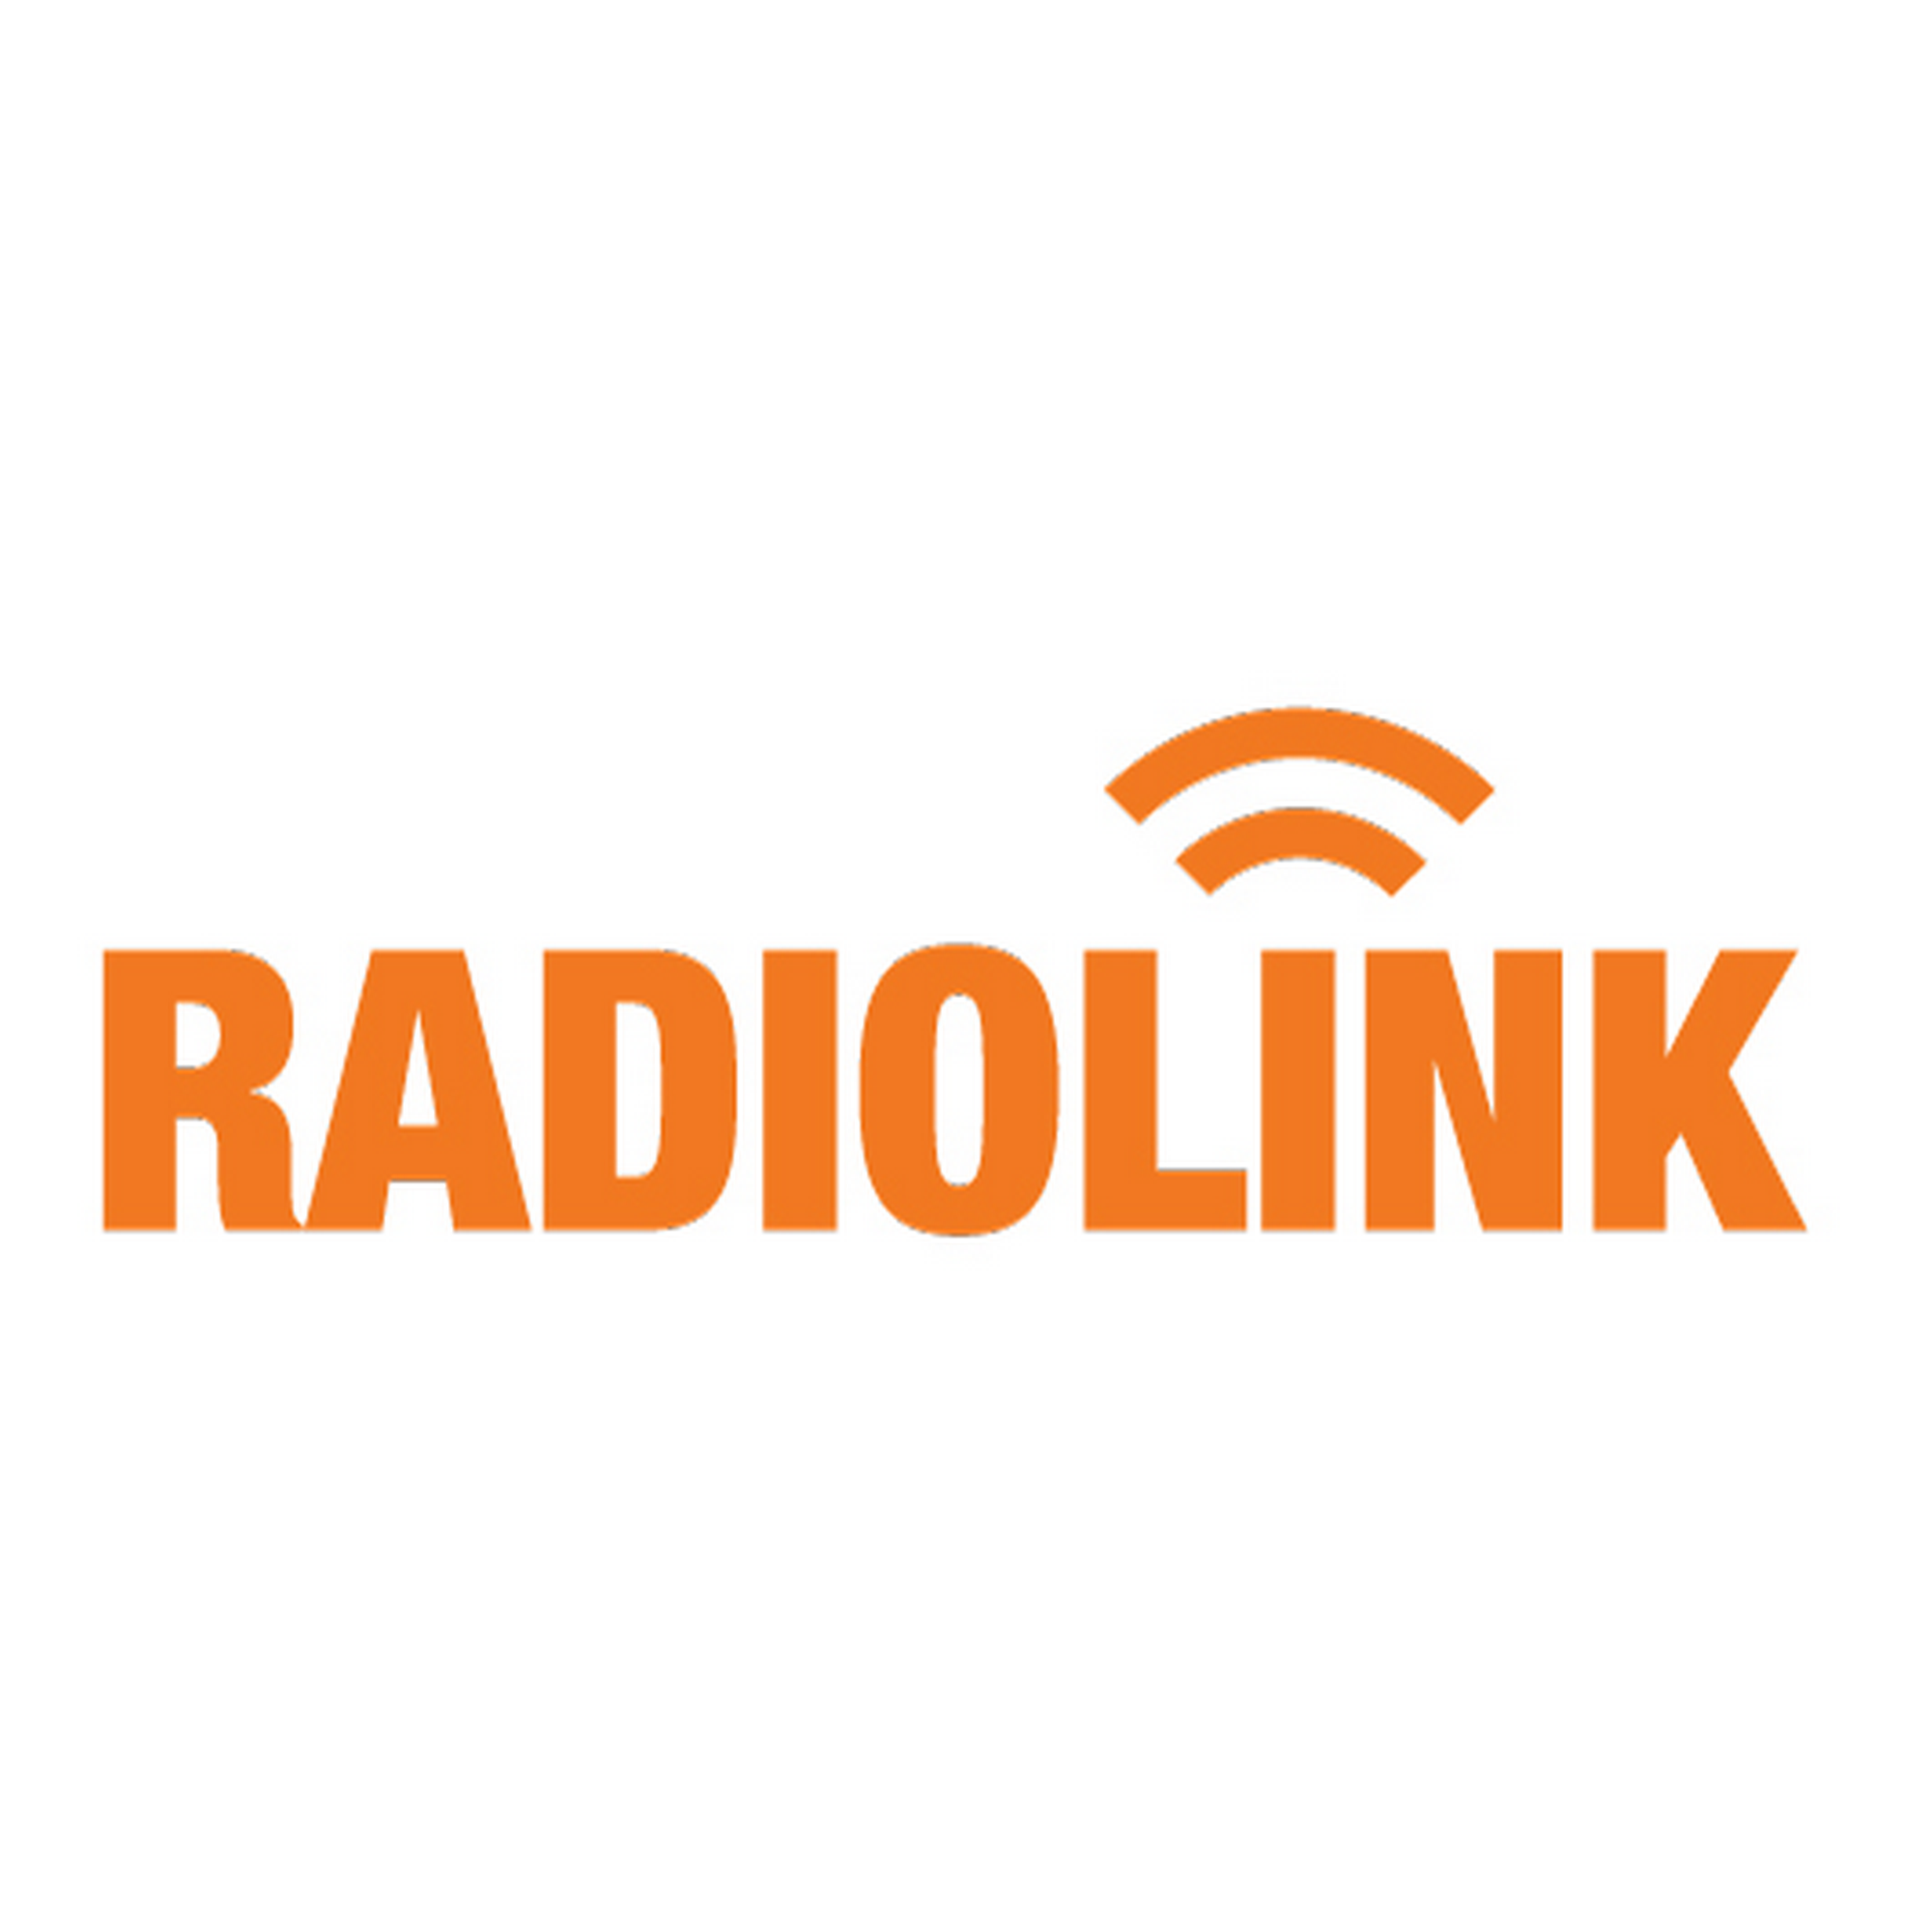 Radiolink Modul für Mähroboter 'Landroid' + product picture